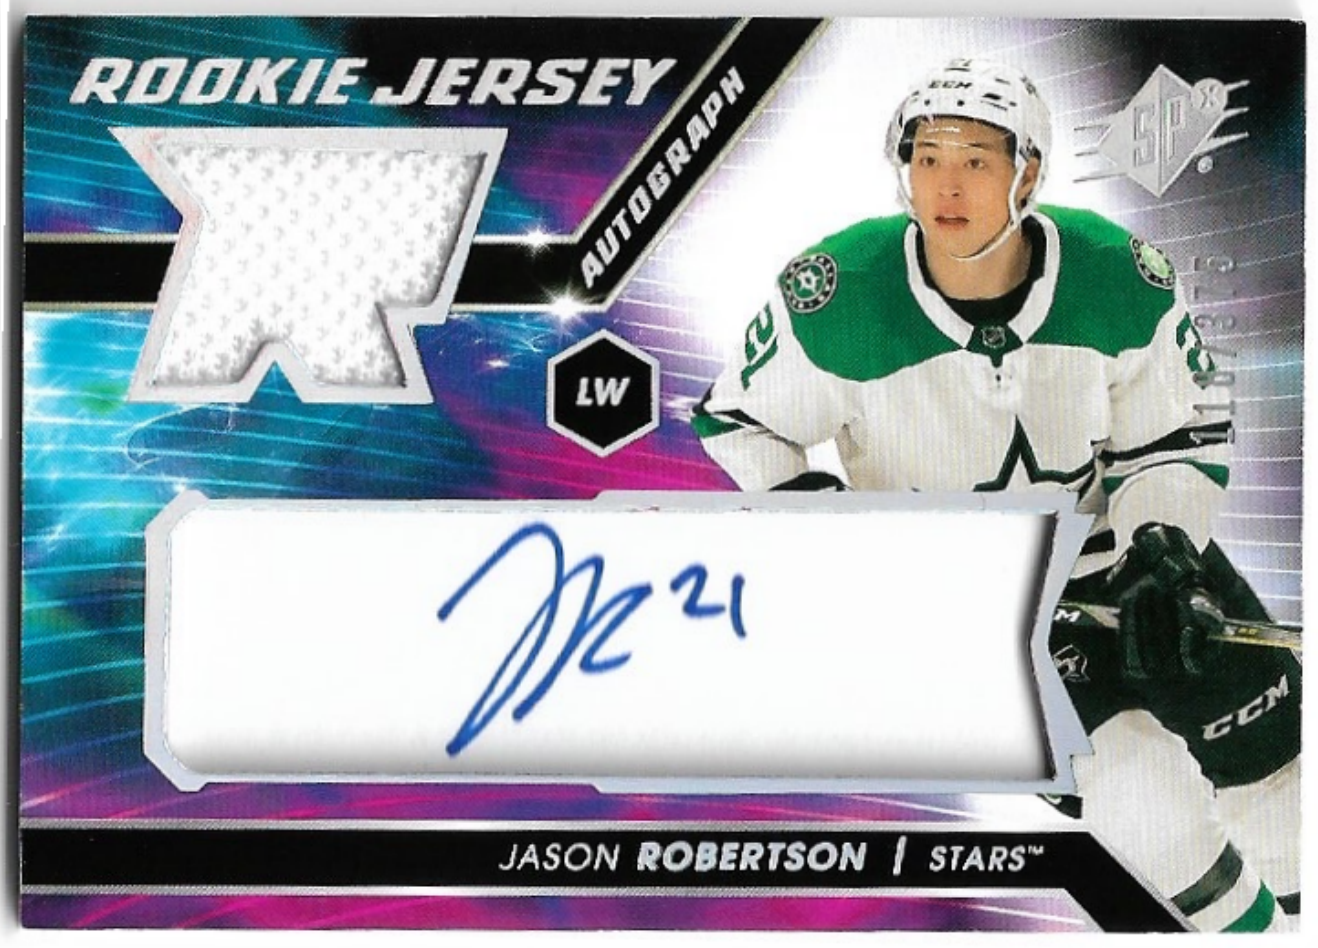 Rookie Jersey Autograph JASON ROBERTSON 20-21 SPx /375